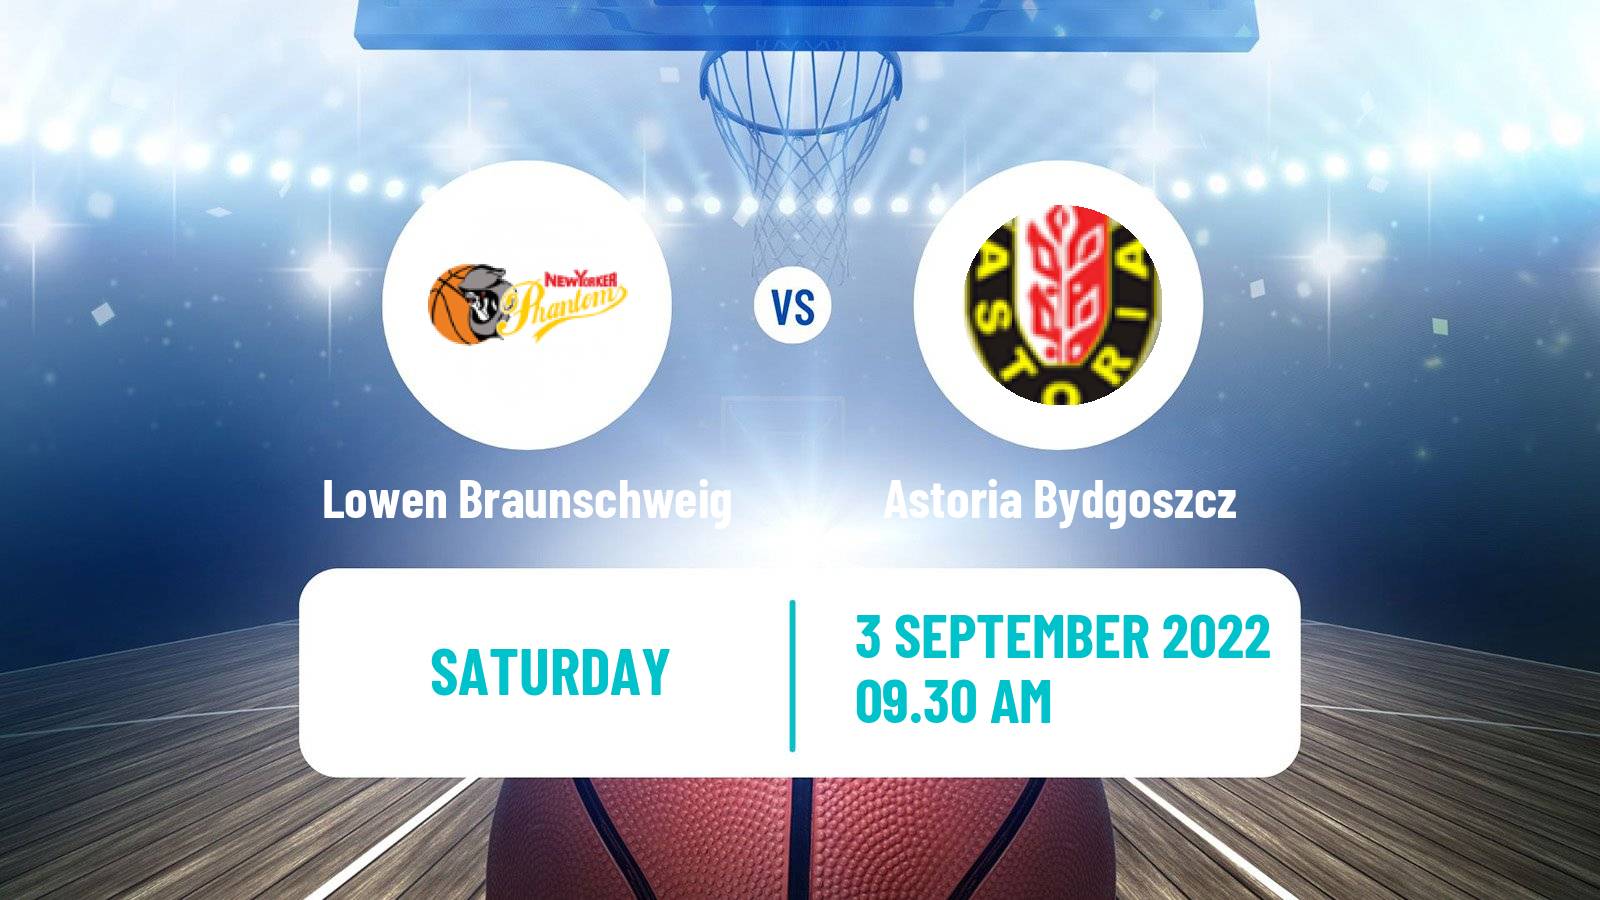 Basketball Club Friendly Basketball Lowen Braunschweig - Astoria Bydgoszcz